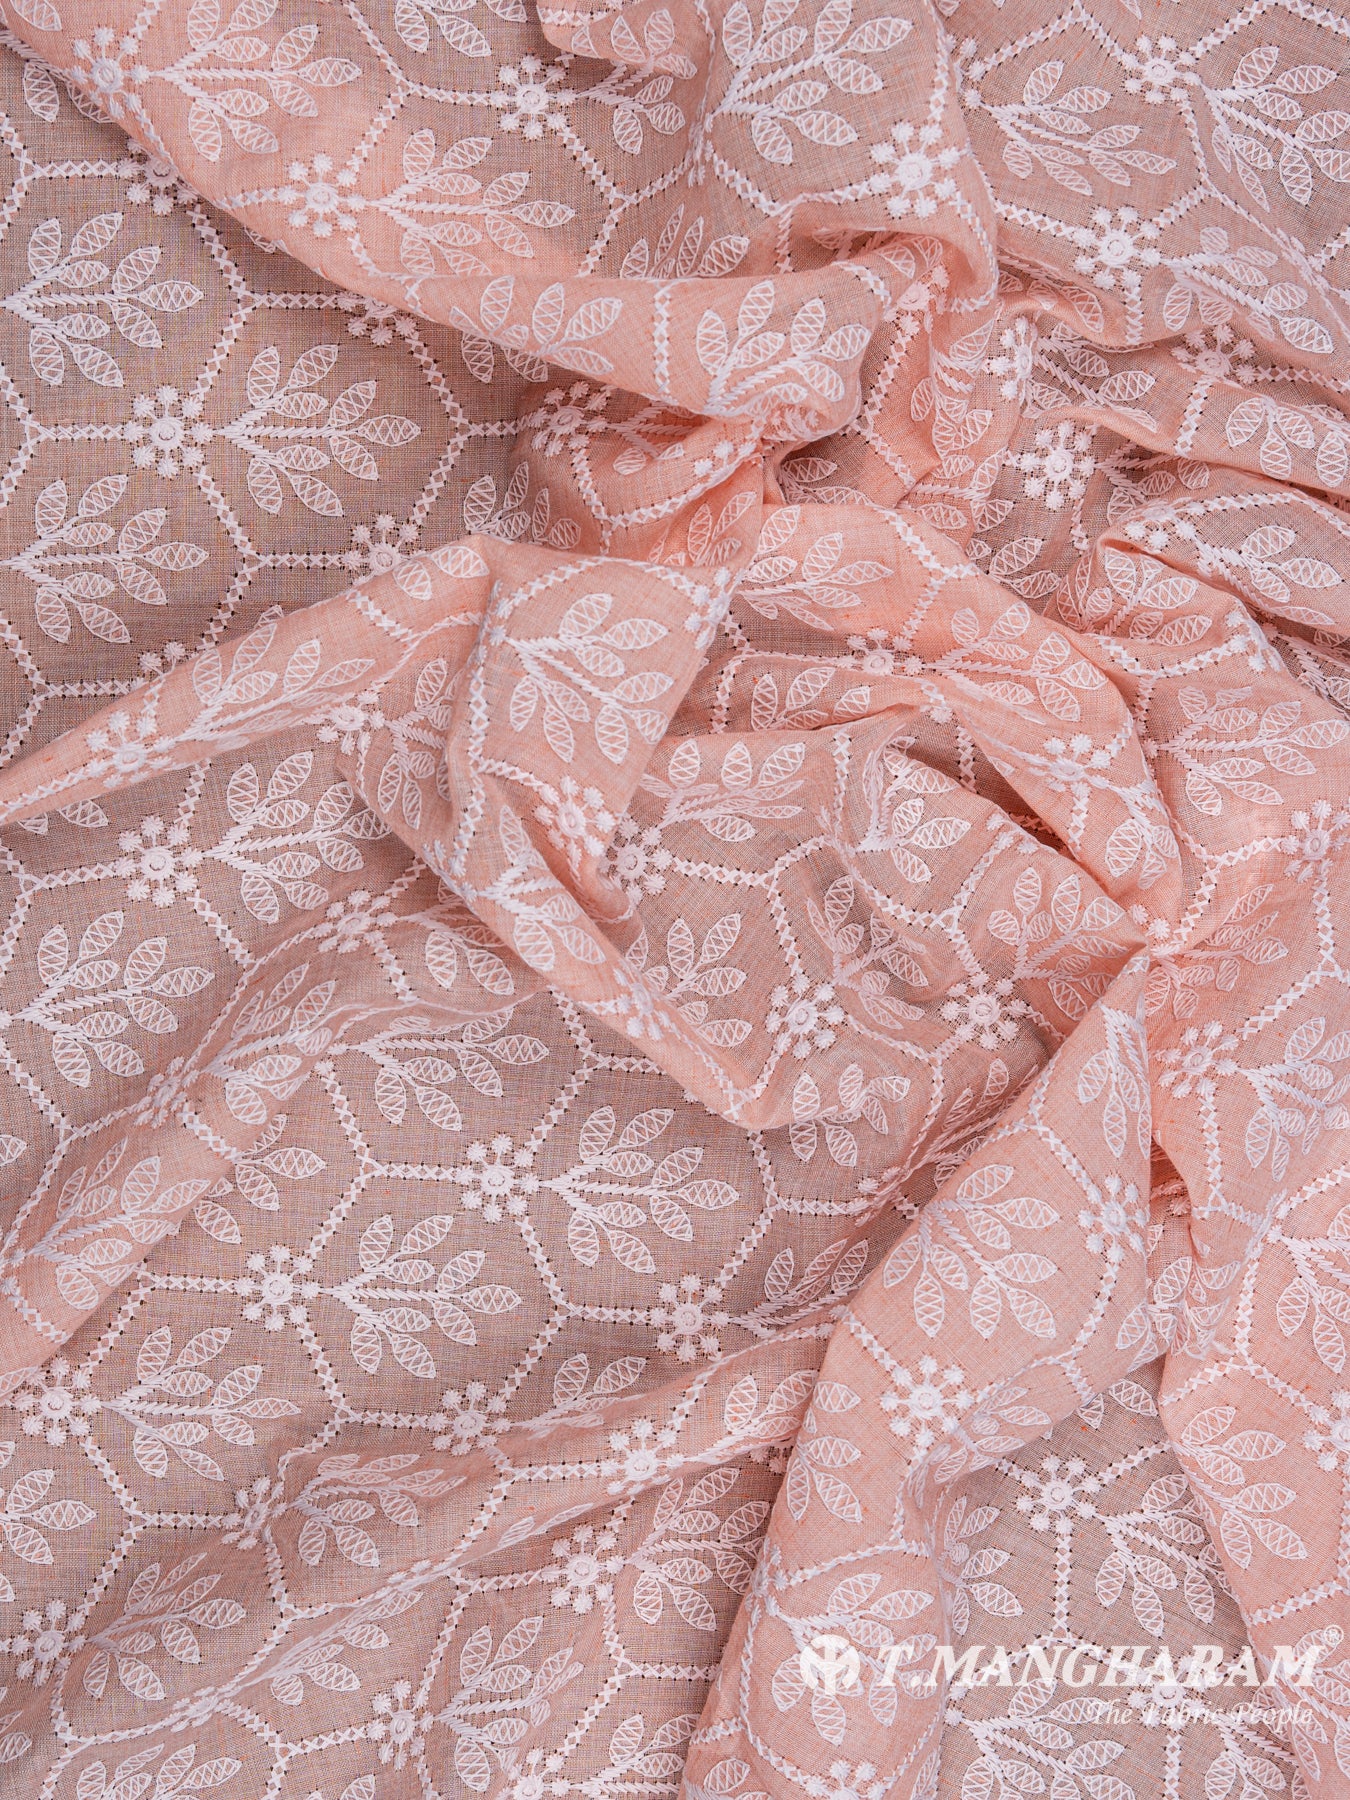 Peach Cotton Embroidery Fabric - EB4806 view-4